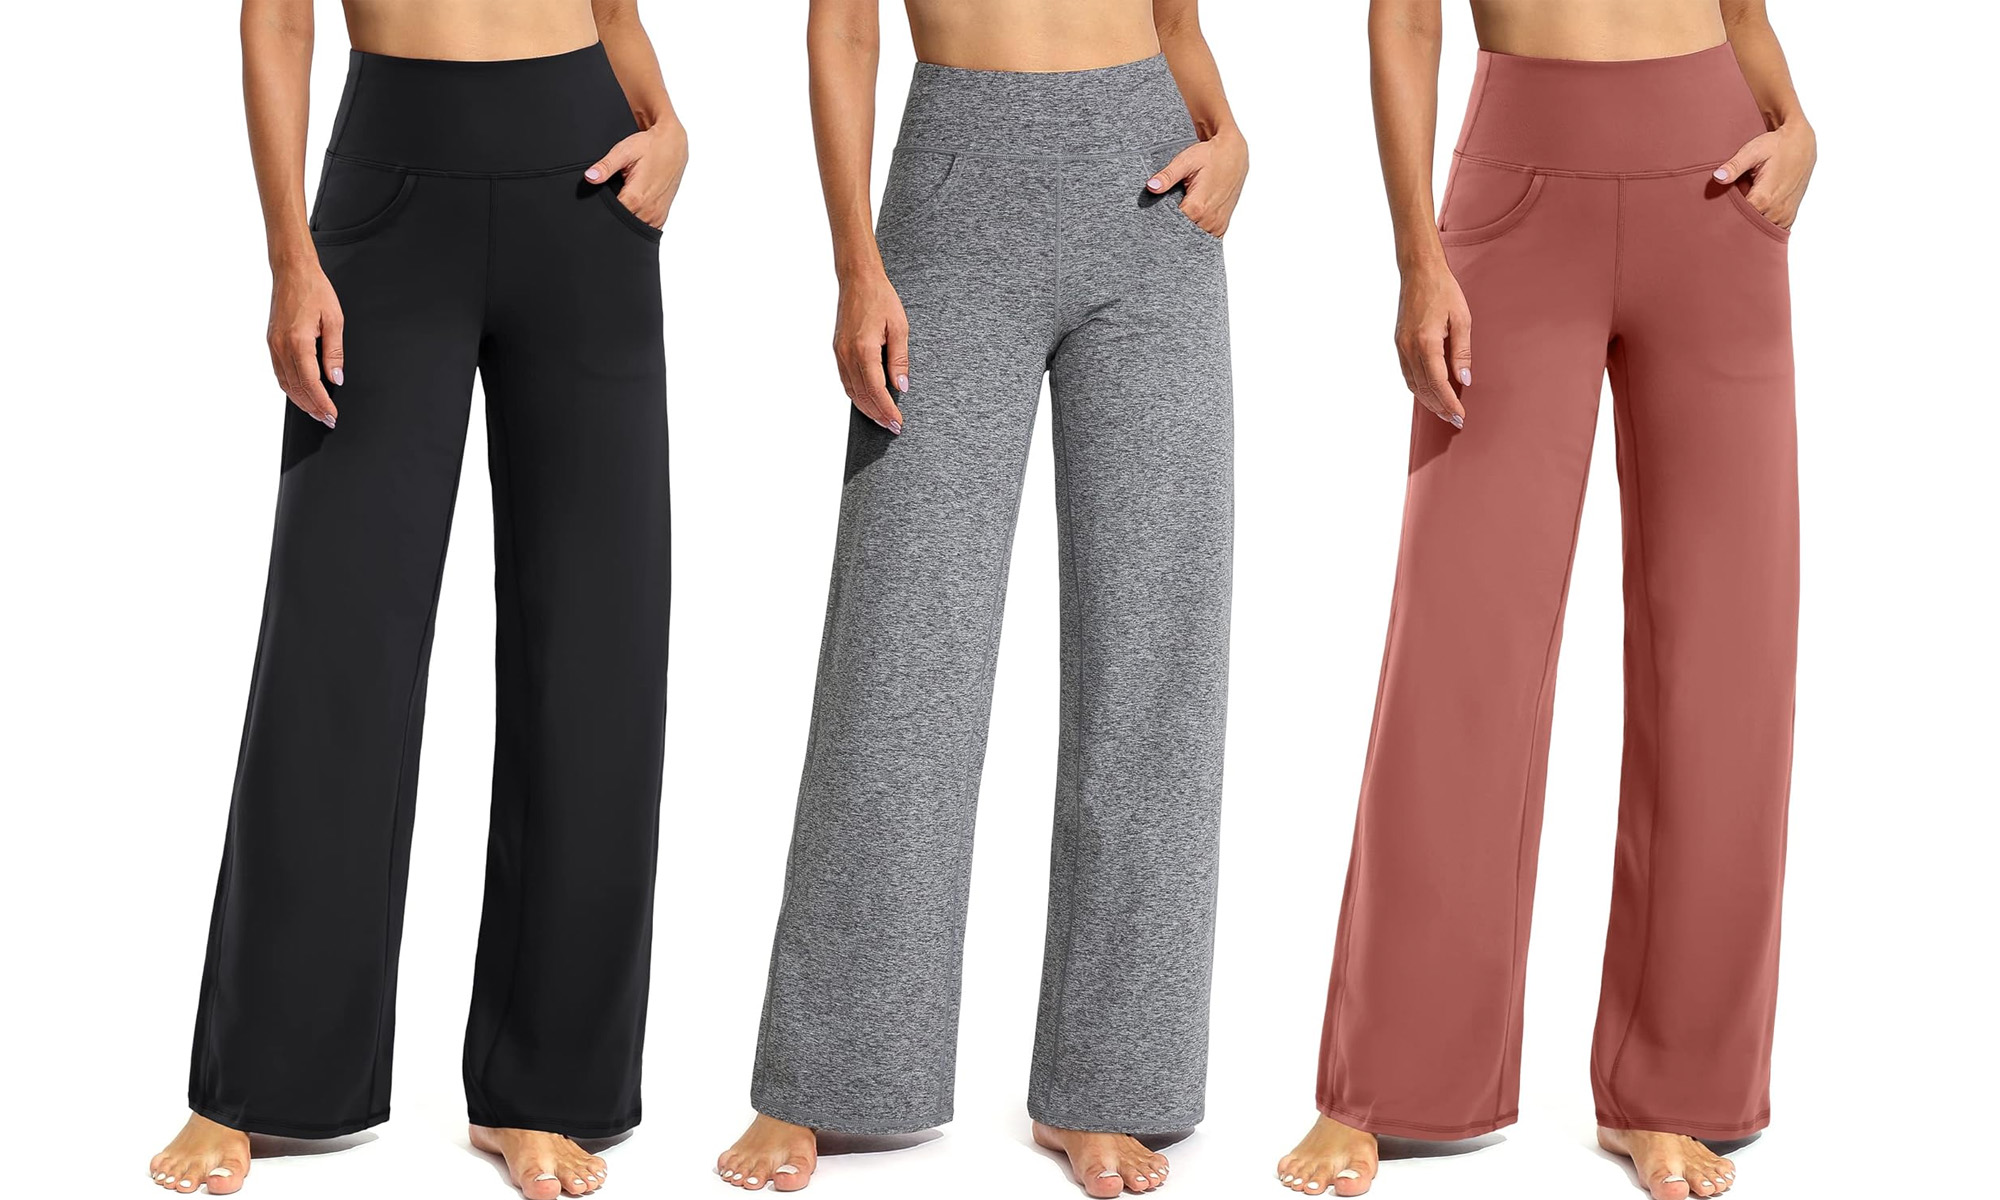 COPYLEAF Womens Flare Yoga Pants